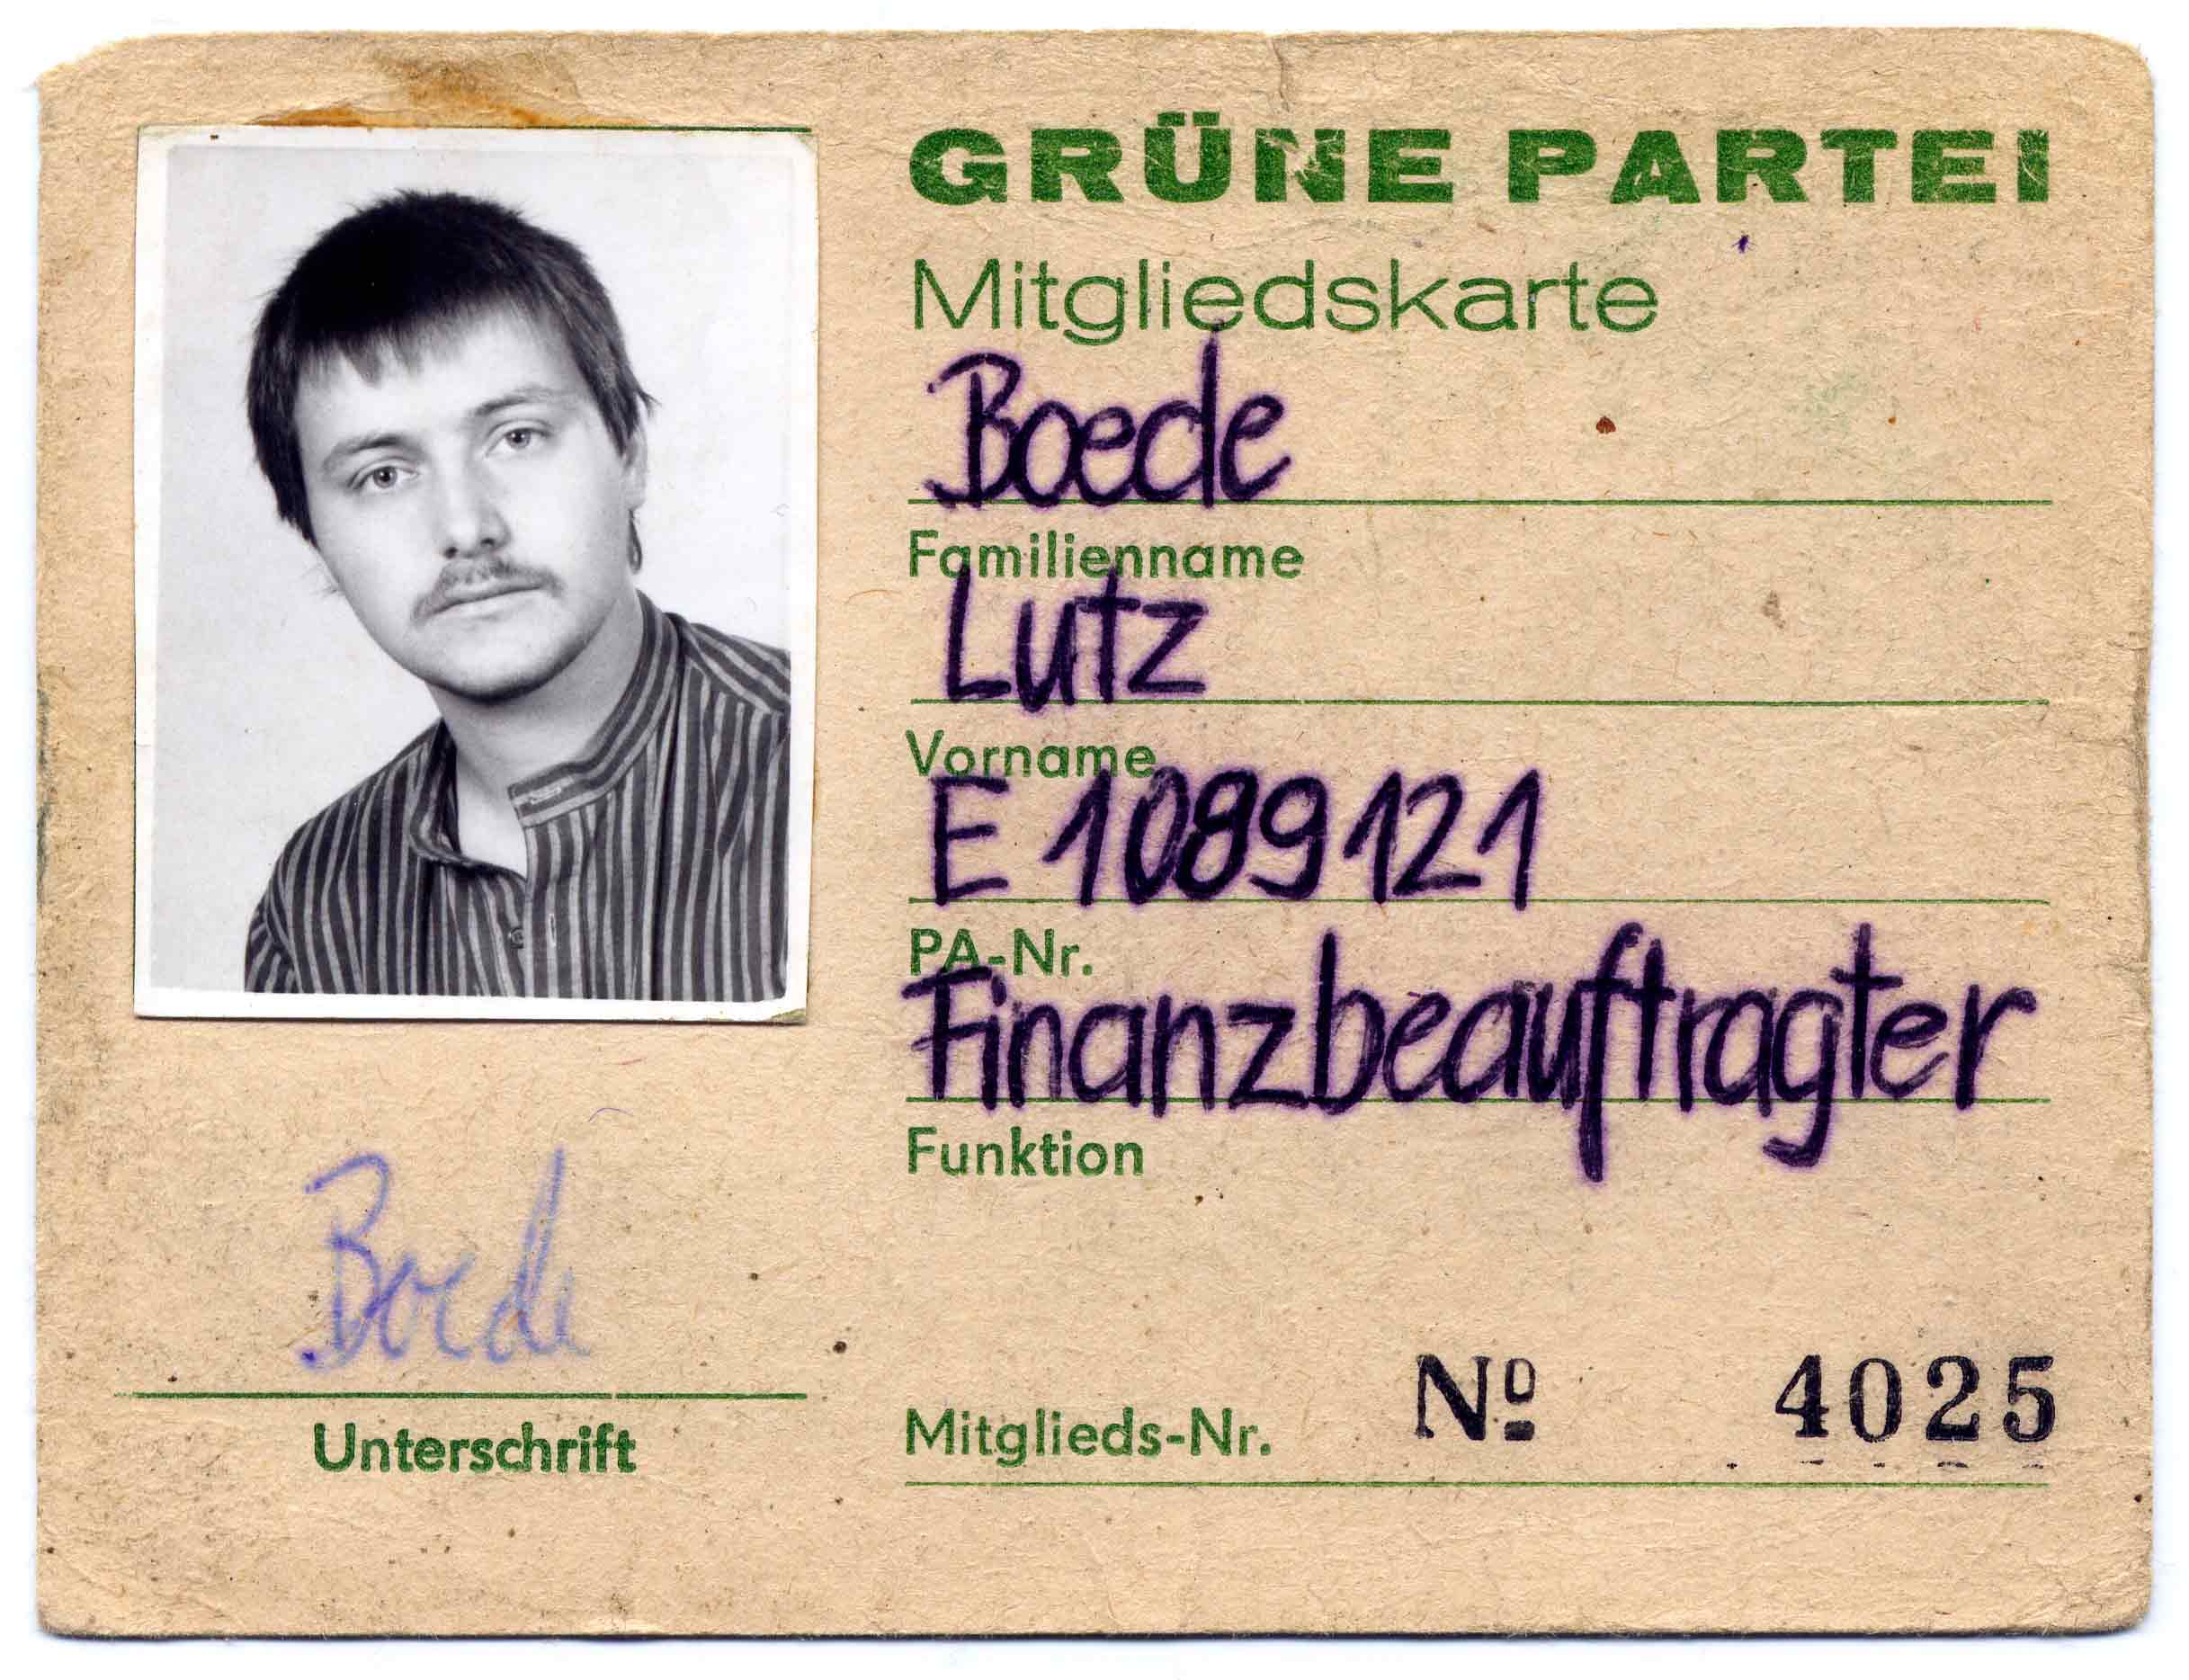 Mitgliedsausweis Gruene Lutz Boede